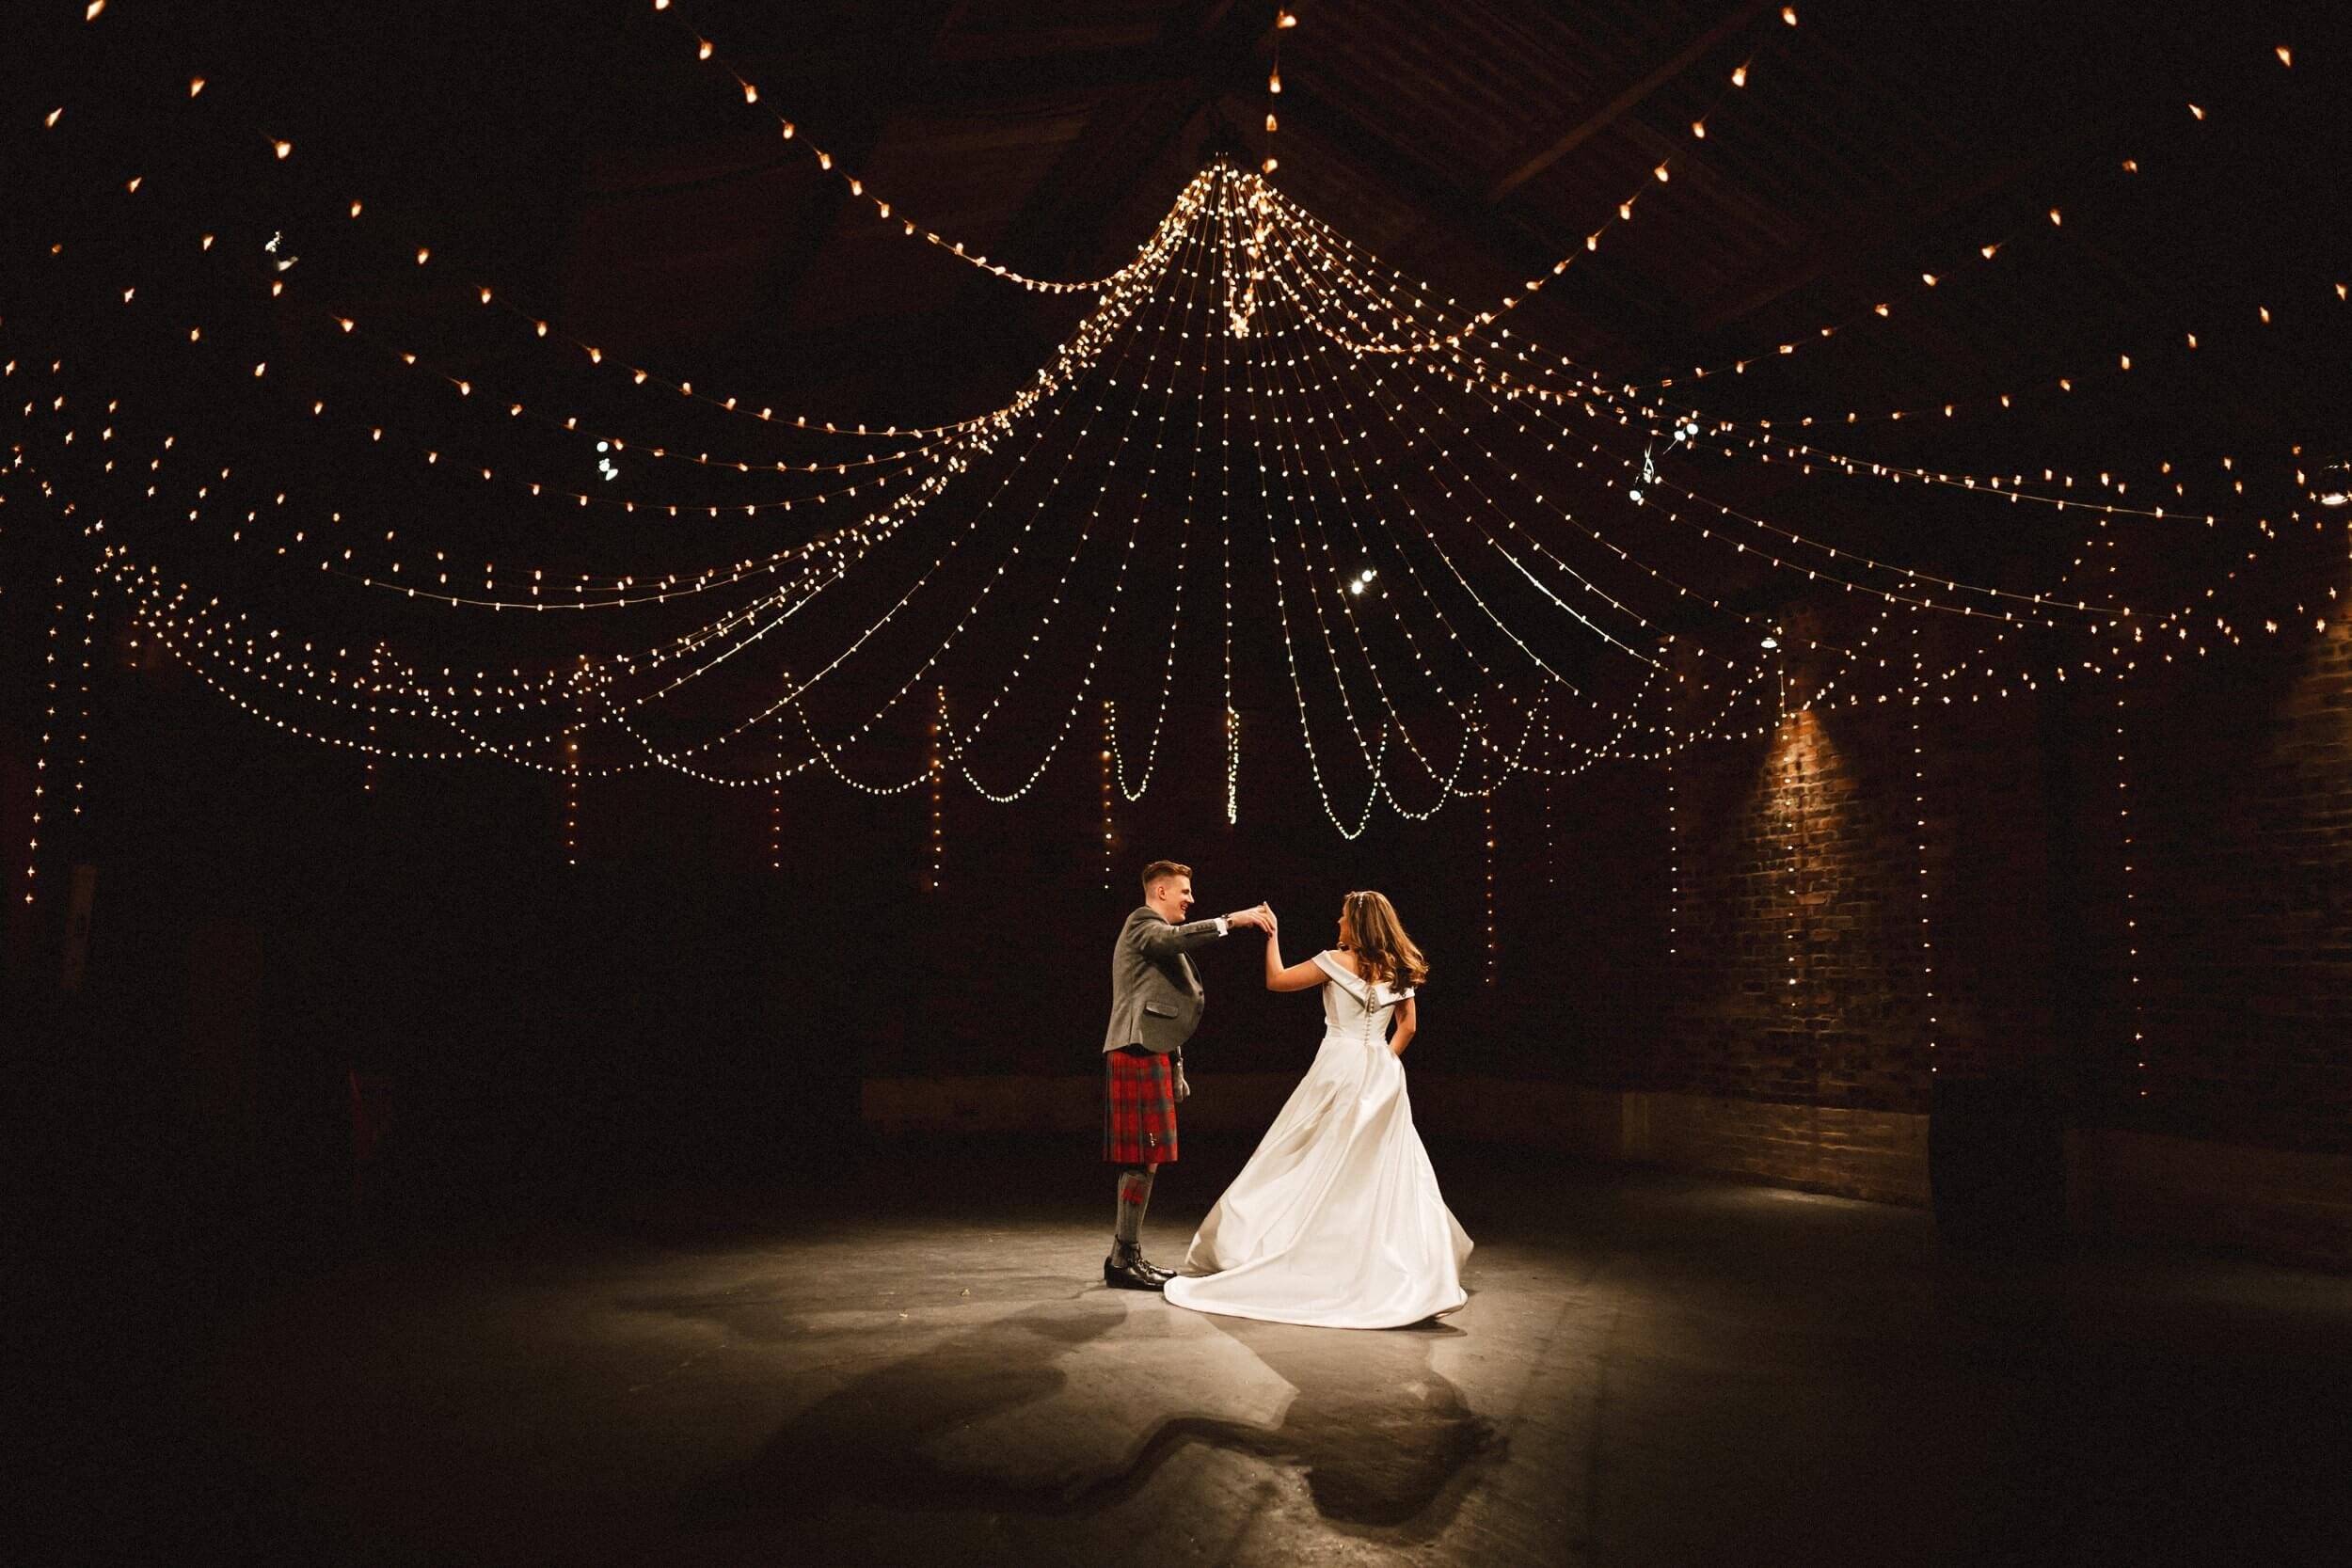 glasgow wedding photographer captures the bride and groom's first dance beneath festoon lighting